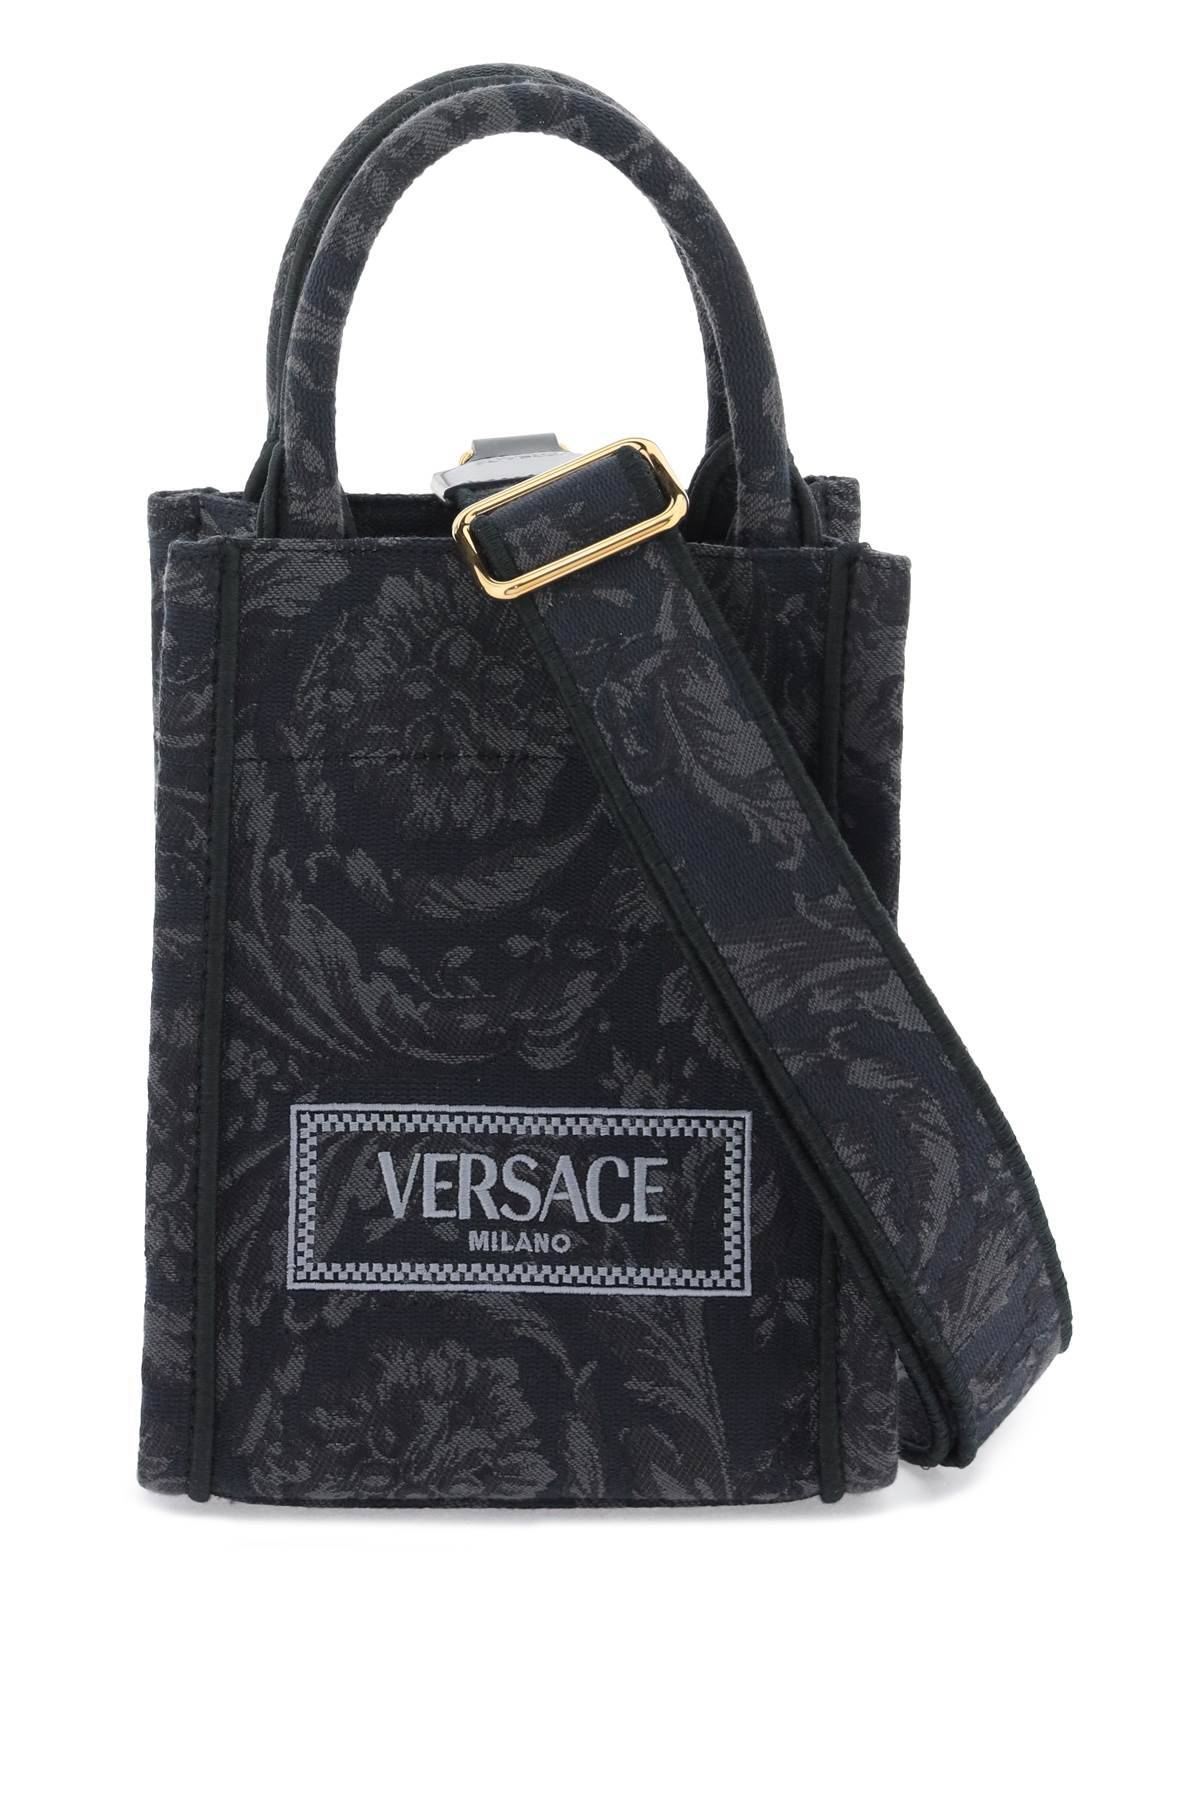 Versace VERSACE athena barocco mini tote bag